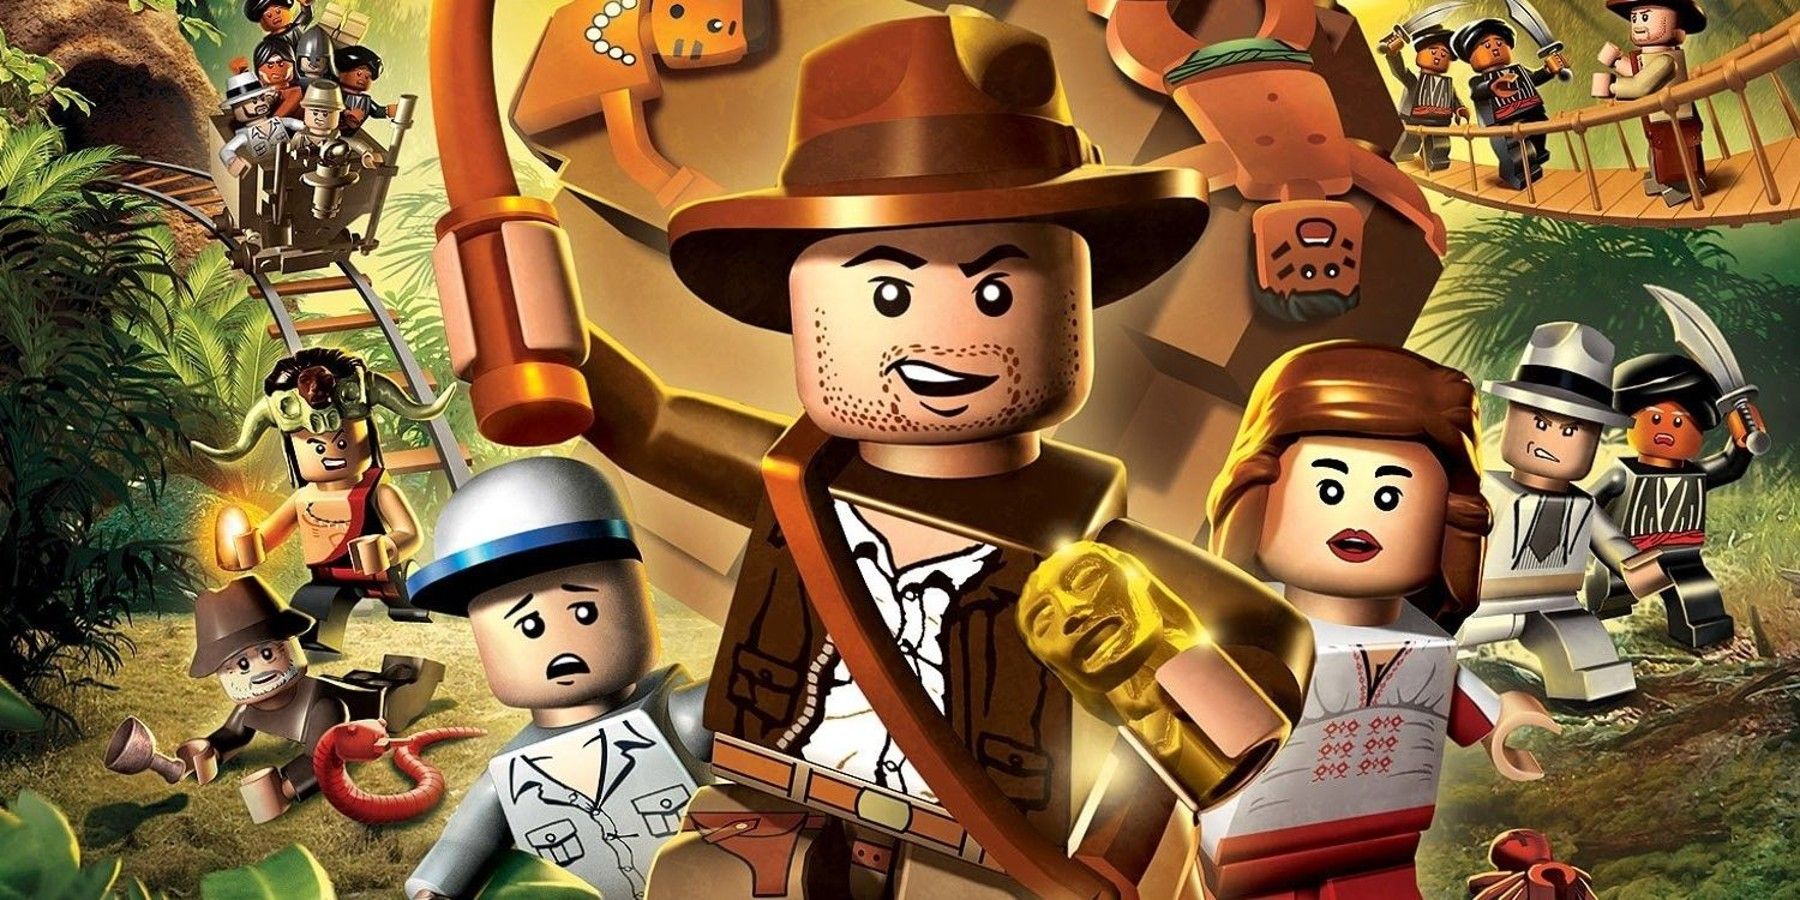 LEGO Debuts 3 New 'Indiana Jones' Sets Info